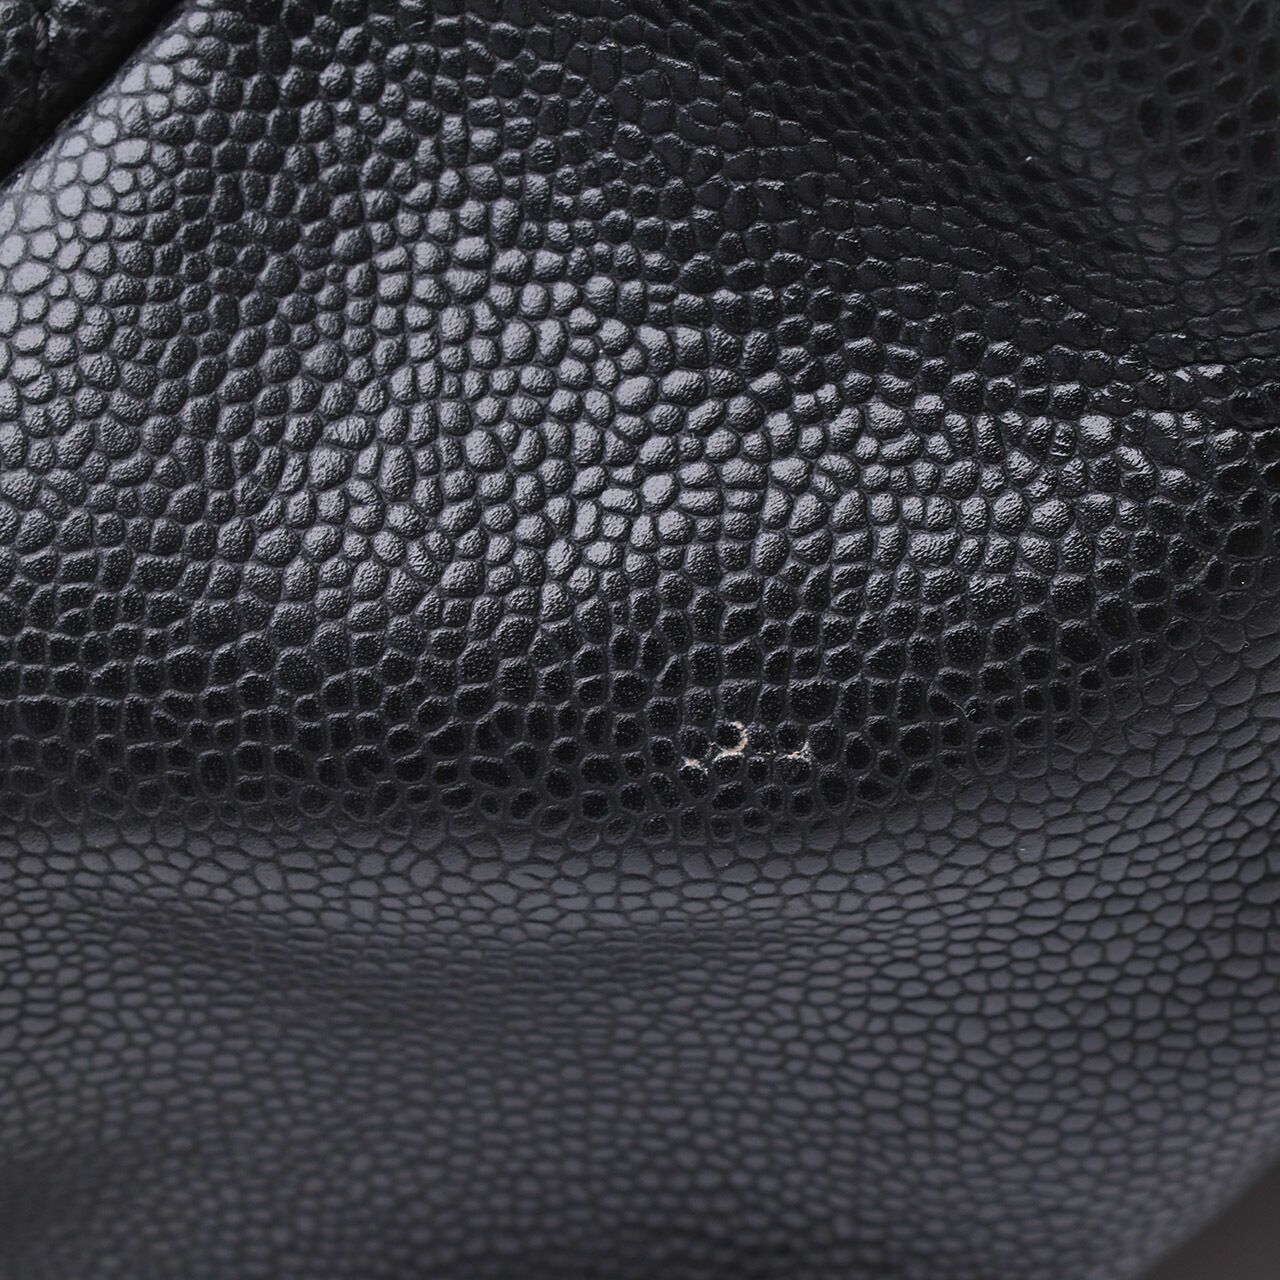 Chanel Caviar Black Shoulder Bag